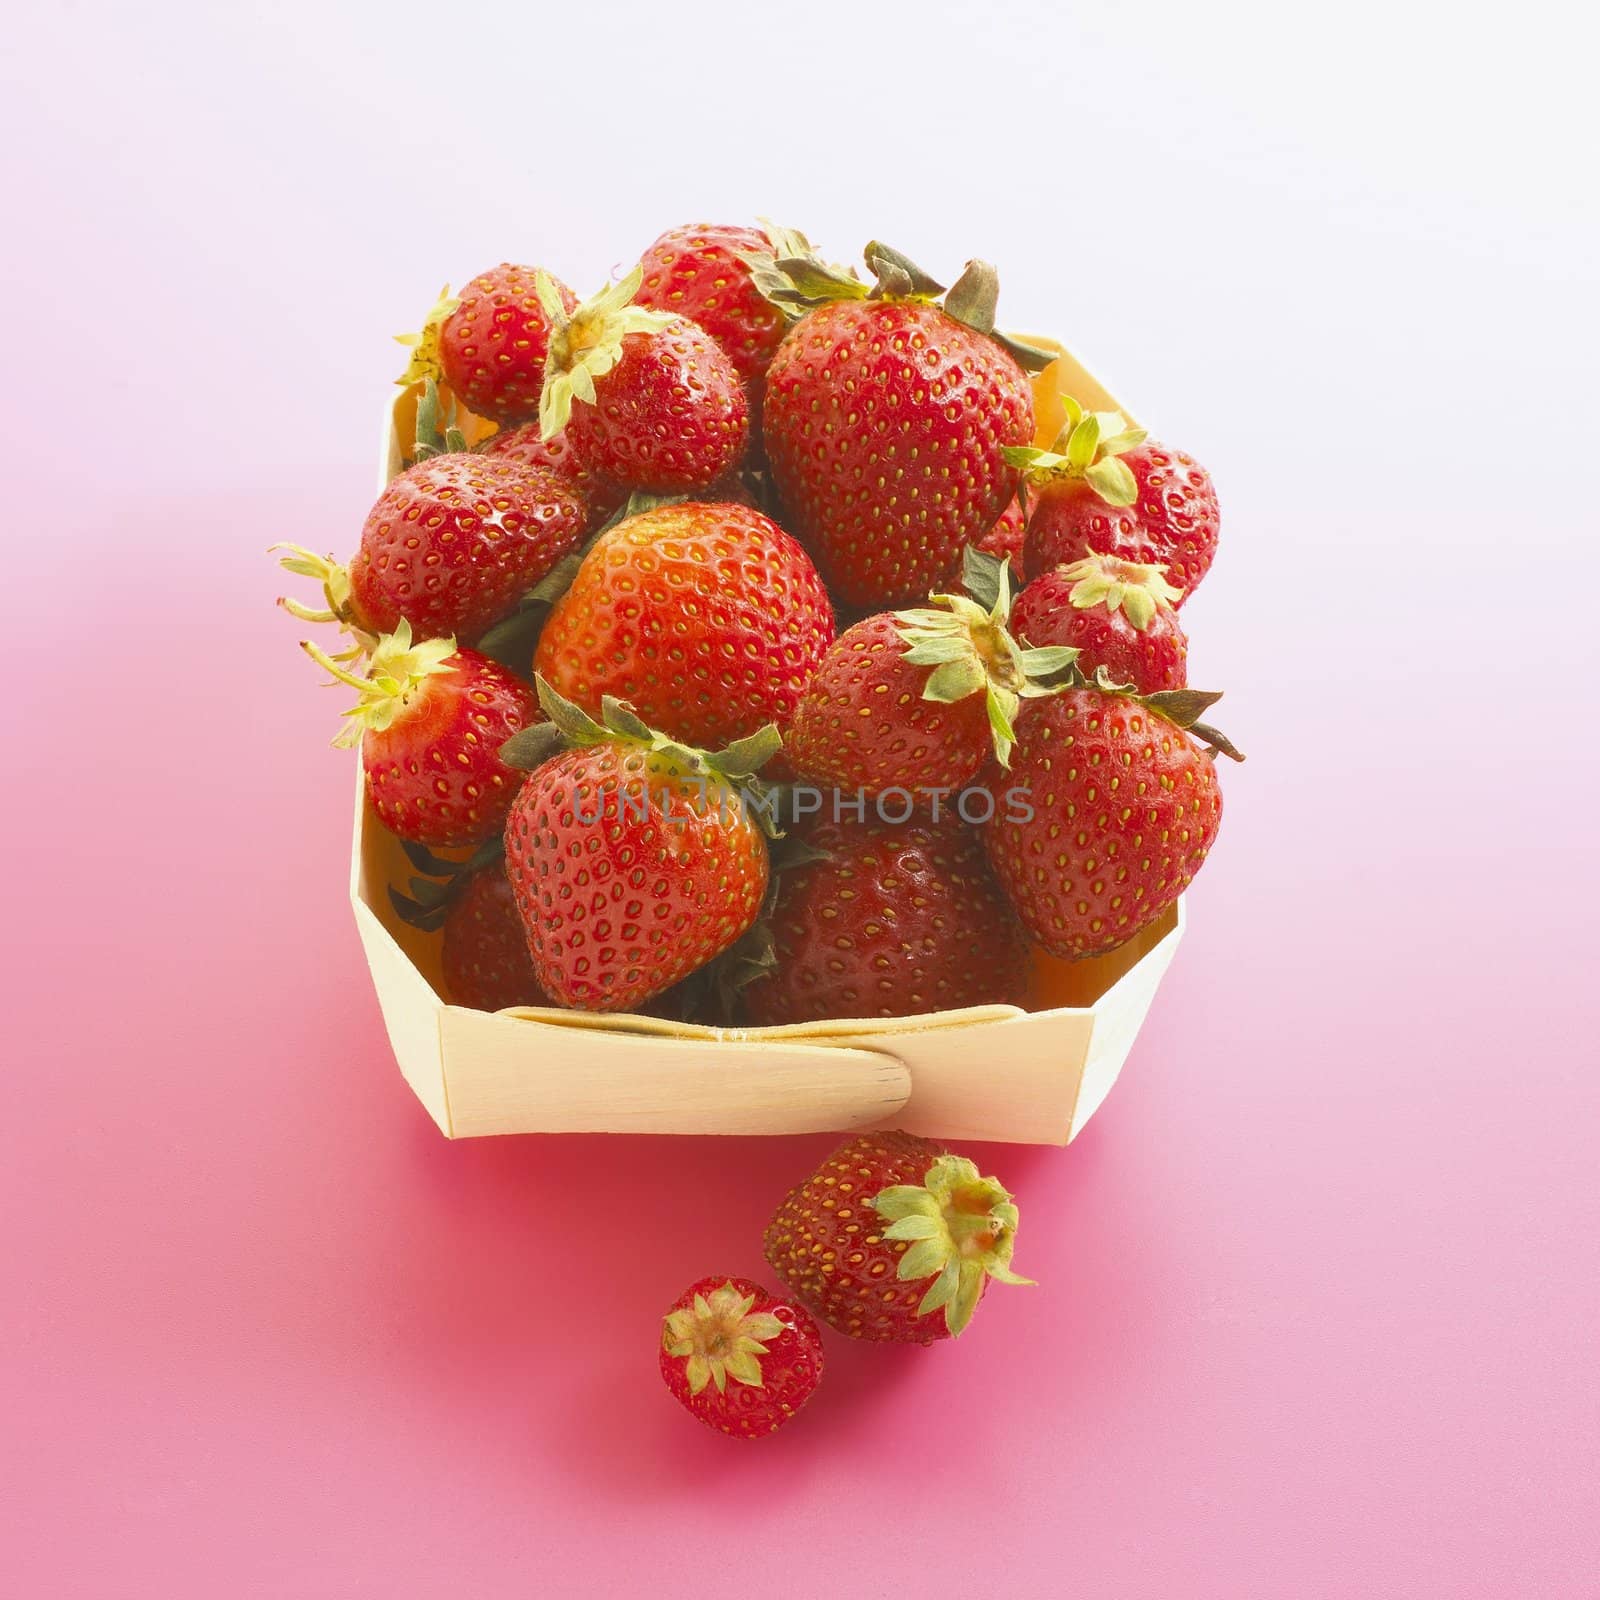 Organic Strawberries in Carton by tornellistefano